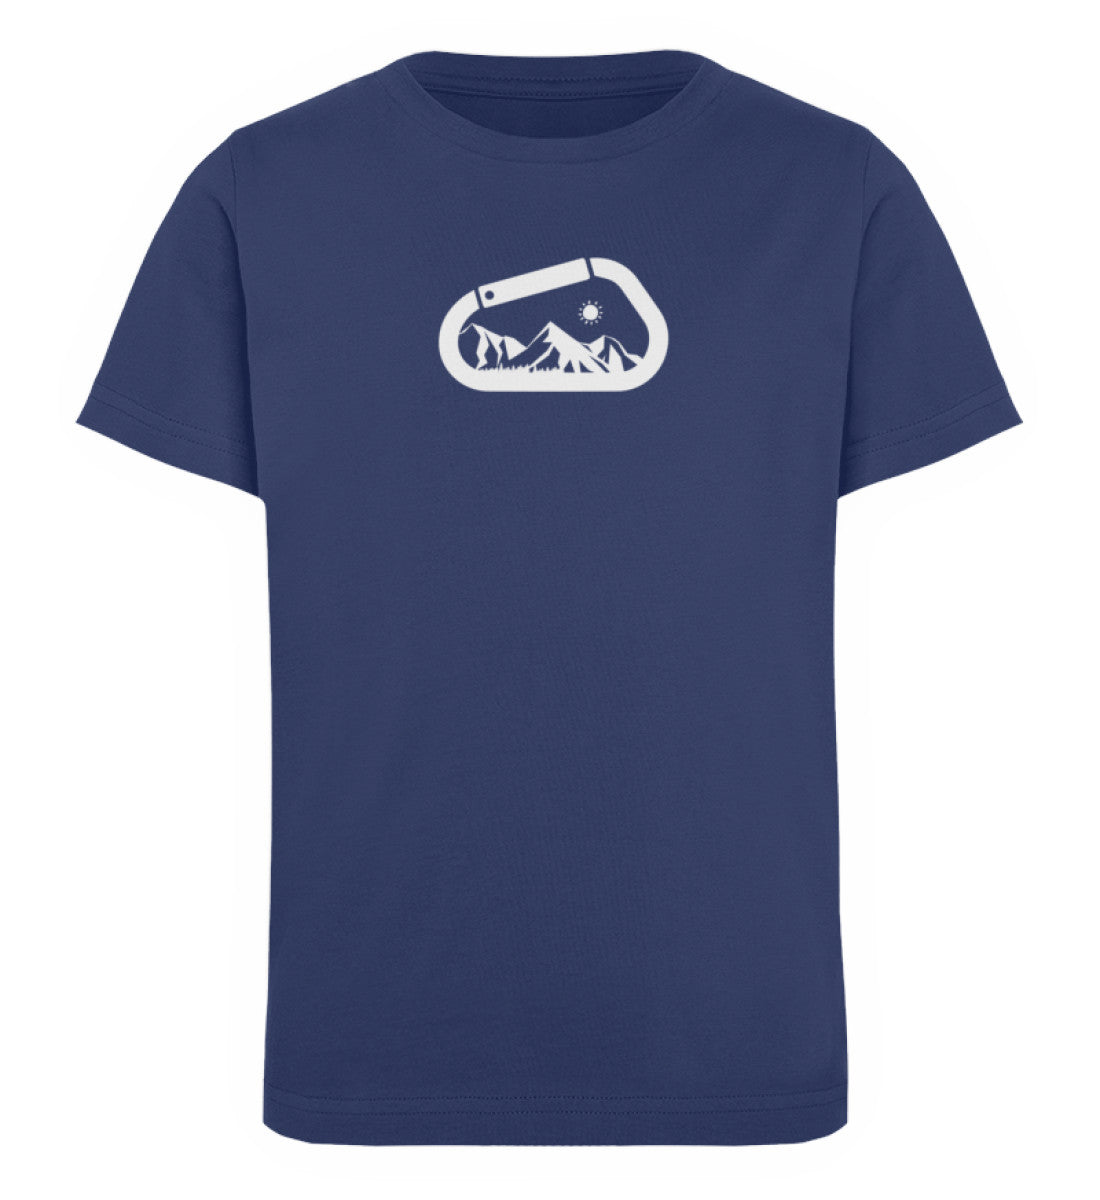 Bergkarabiner - Kinder Premium Organic T-Shirt klettern Navyblau